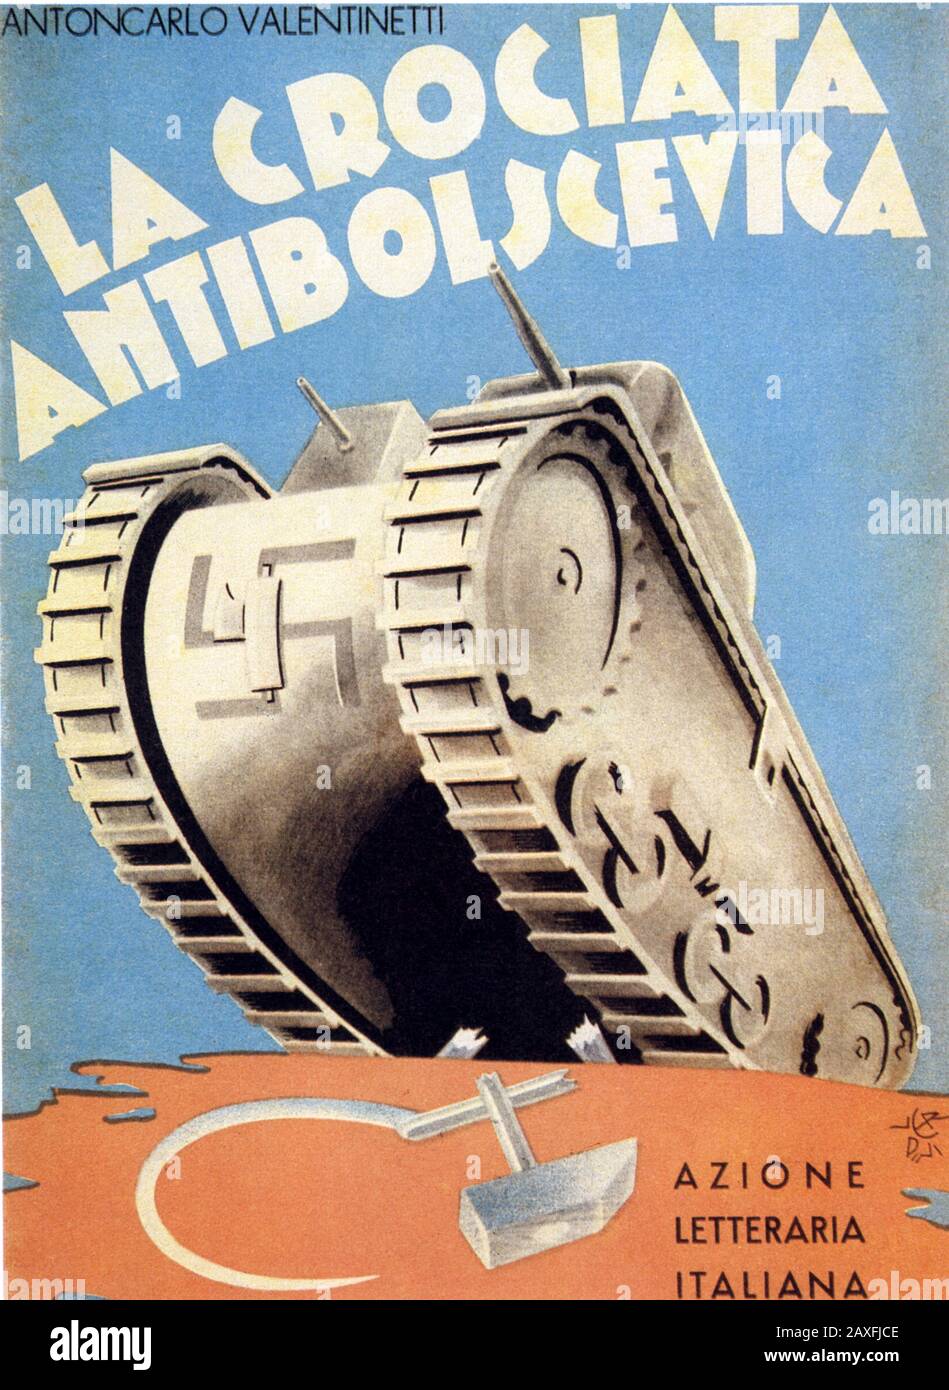 1941 Ca, ITALIEN: Cover der fasstischen BUCHPROPAGANDA mit dem Titel LA CROCIATA ANTIBOLSCEVICA (Anti-Bolschewistischer Kreuzzug). Artwork von Verdini - FASCISMO - FASCISTA - FASCHISMUS - ANNI QUARANTA - AUTARCHIA - AUTARCHICO - BANDIERA TRICOLORE ITALIANA - ITALIA - 40 - libro - copertina - Cover - Carroarmato - SVASTICA - FALCE E MARTELLO - FOTO STORICHE - GESCHICHTE - GESCHICHTE - GESCHICHTE - GESCHICHTE - ITALIEN - XX JAHRHUNDERT - NOVECENTO - SECONDA GUERRA MONDIALE - 2. WELTKRIEG II - RUSSLAND - URSS © ARCHIVIO GBB / Stockfoto